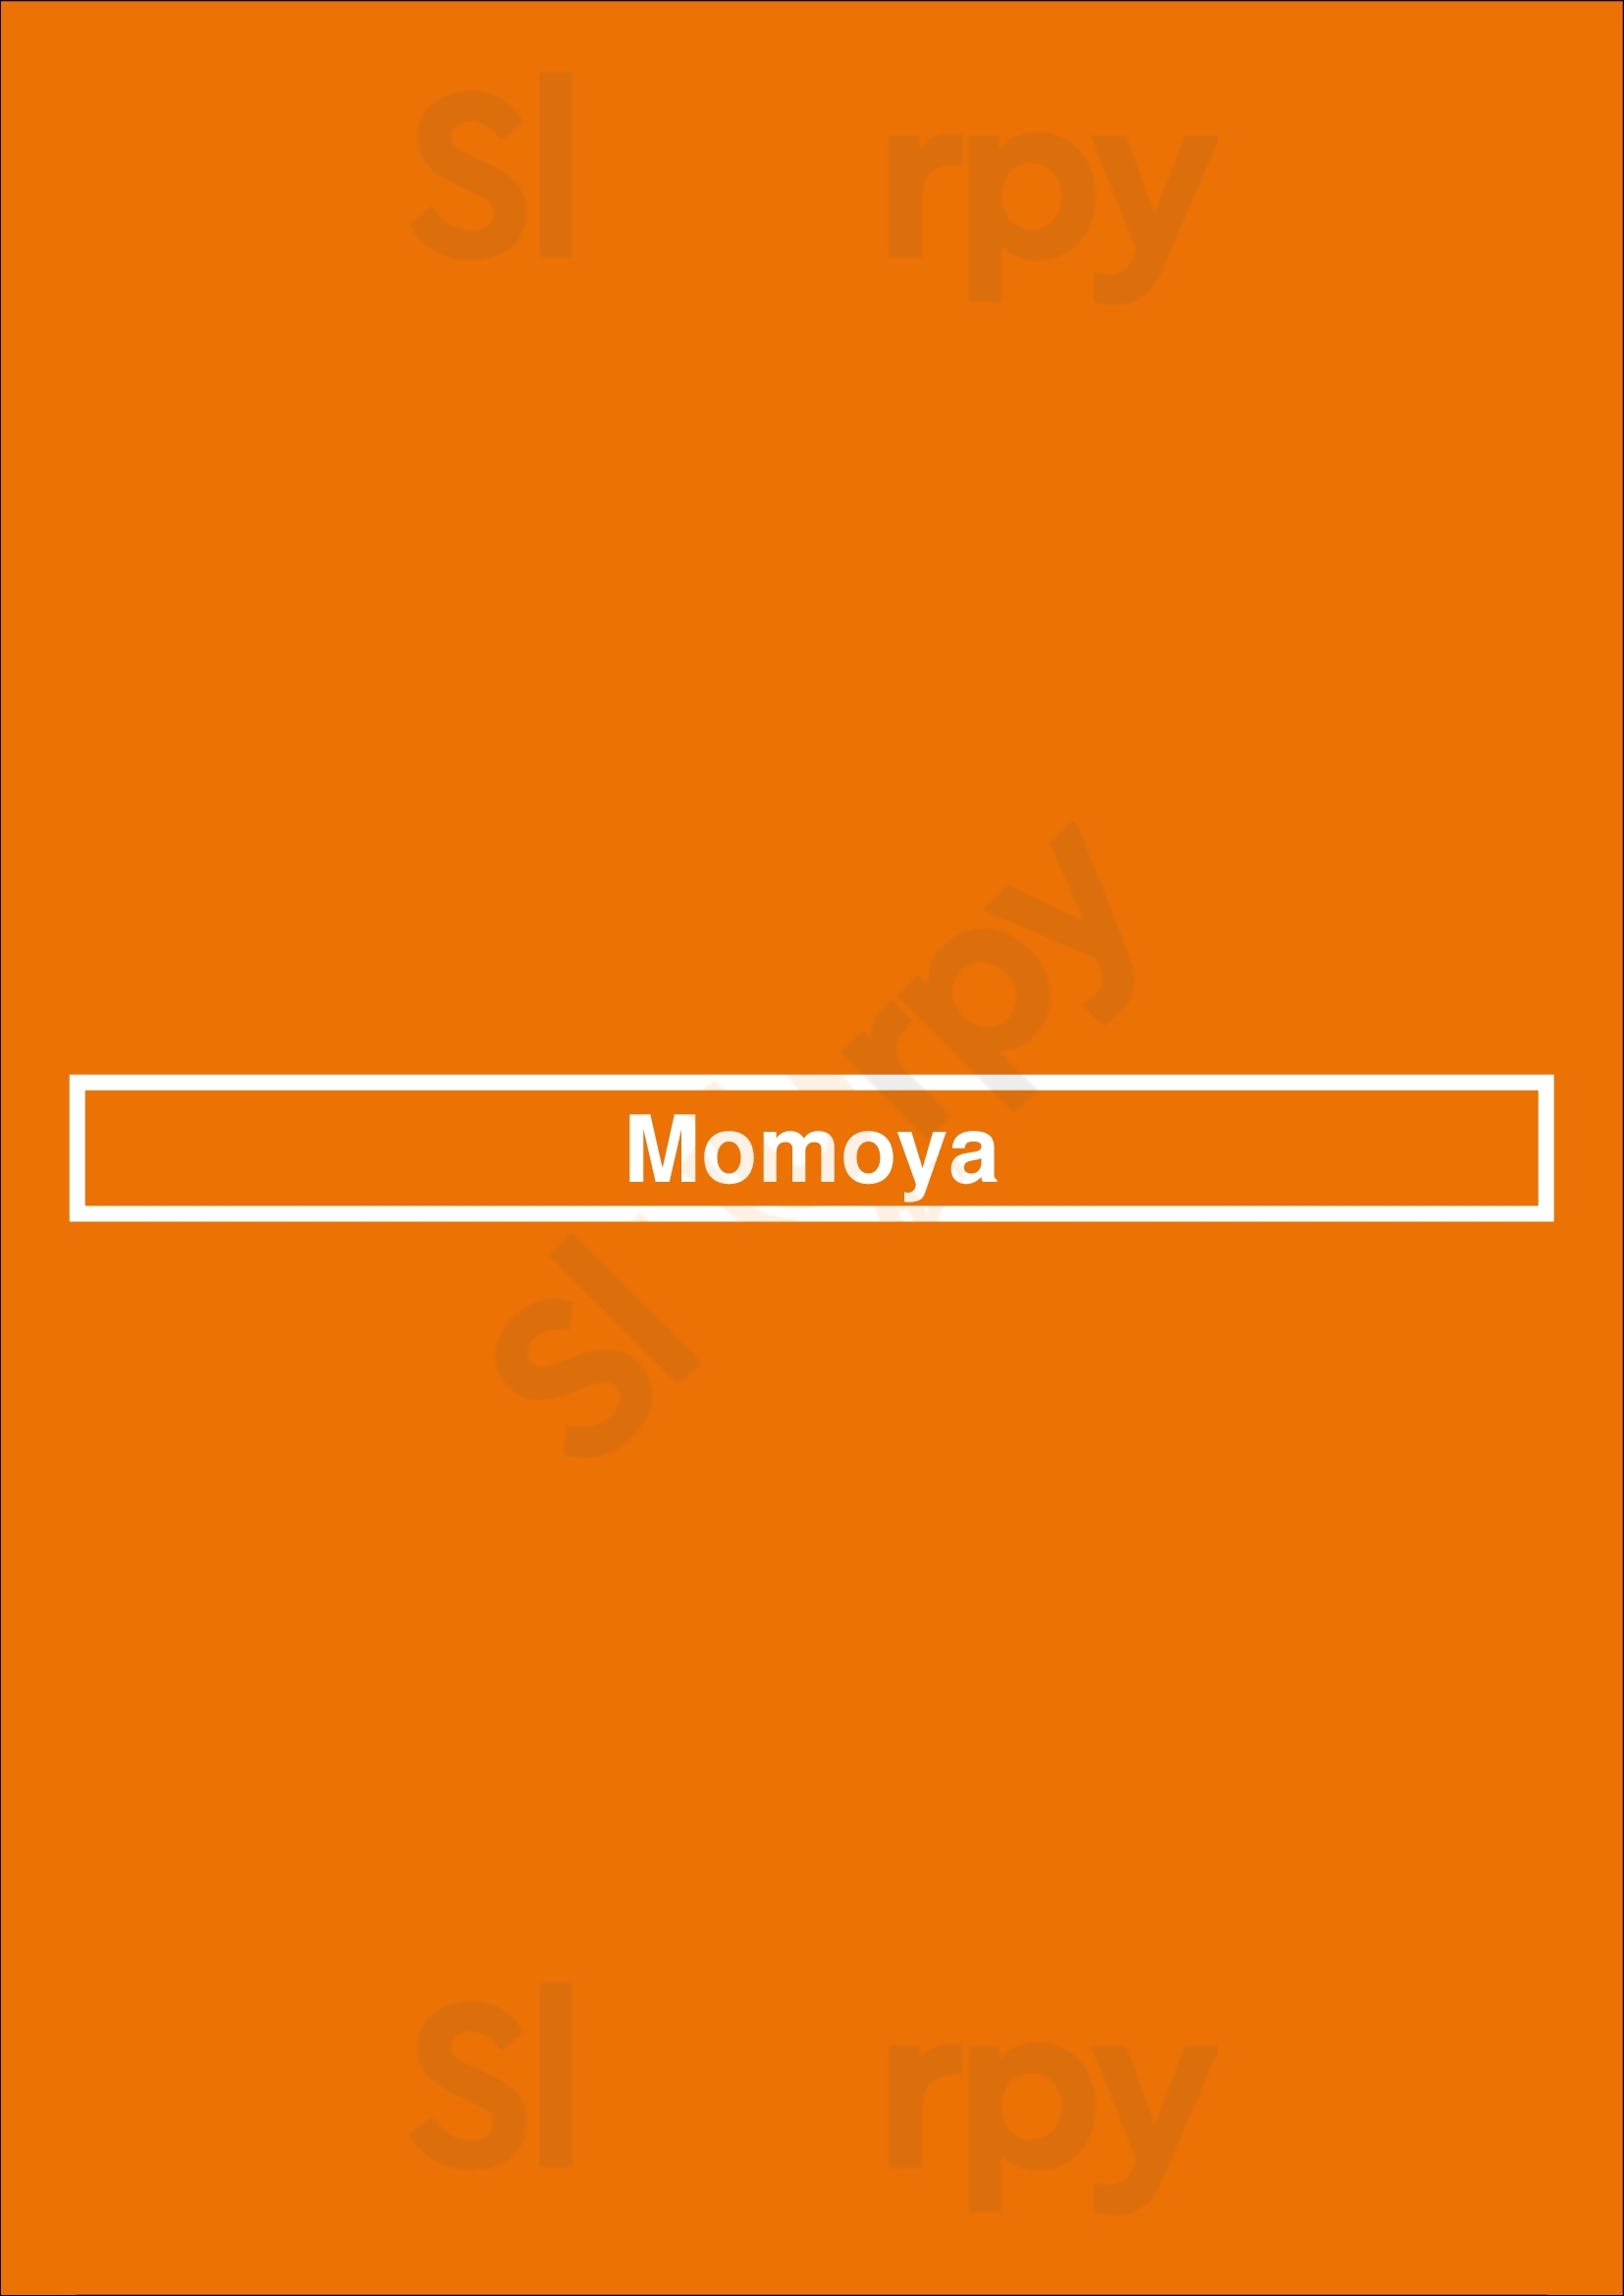 Momoya Roermond Menu - 1